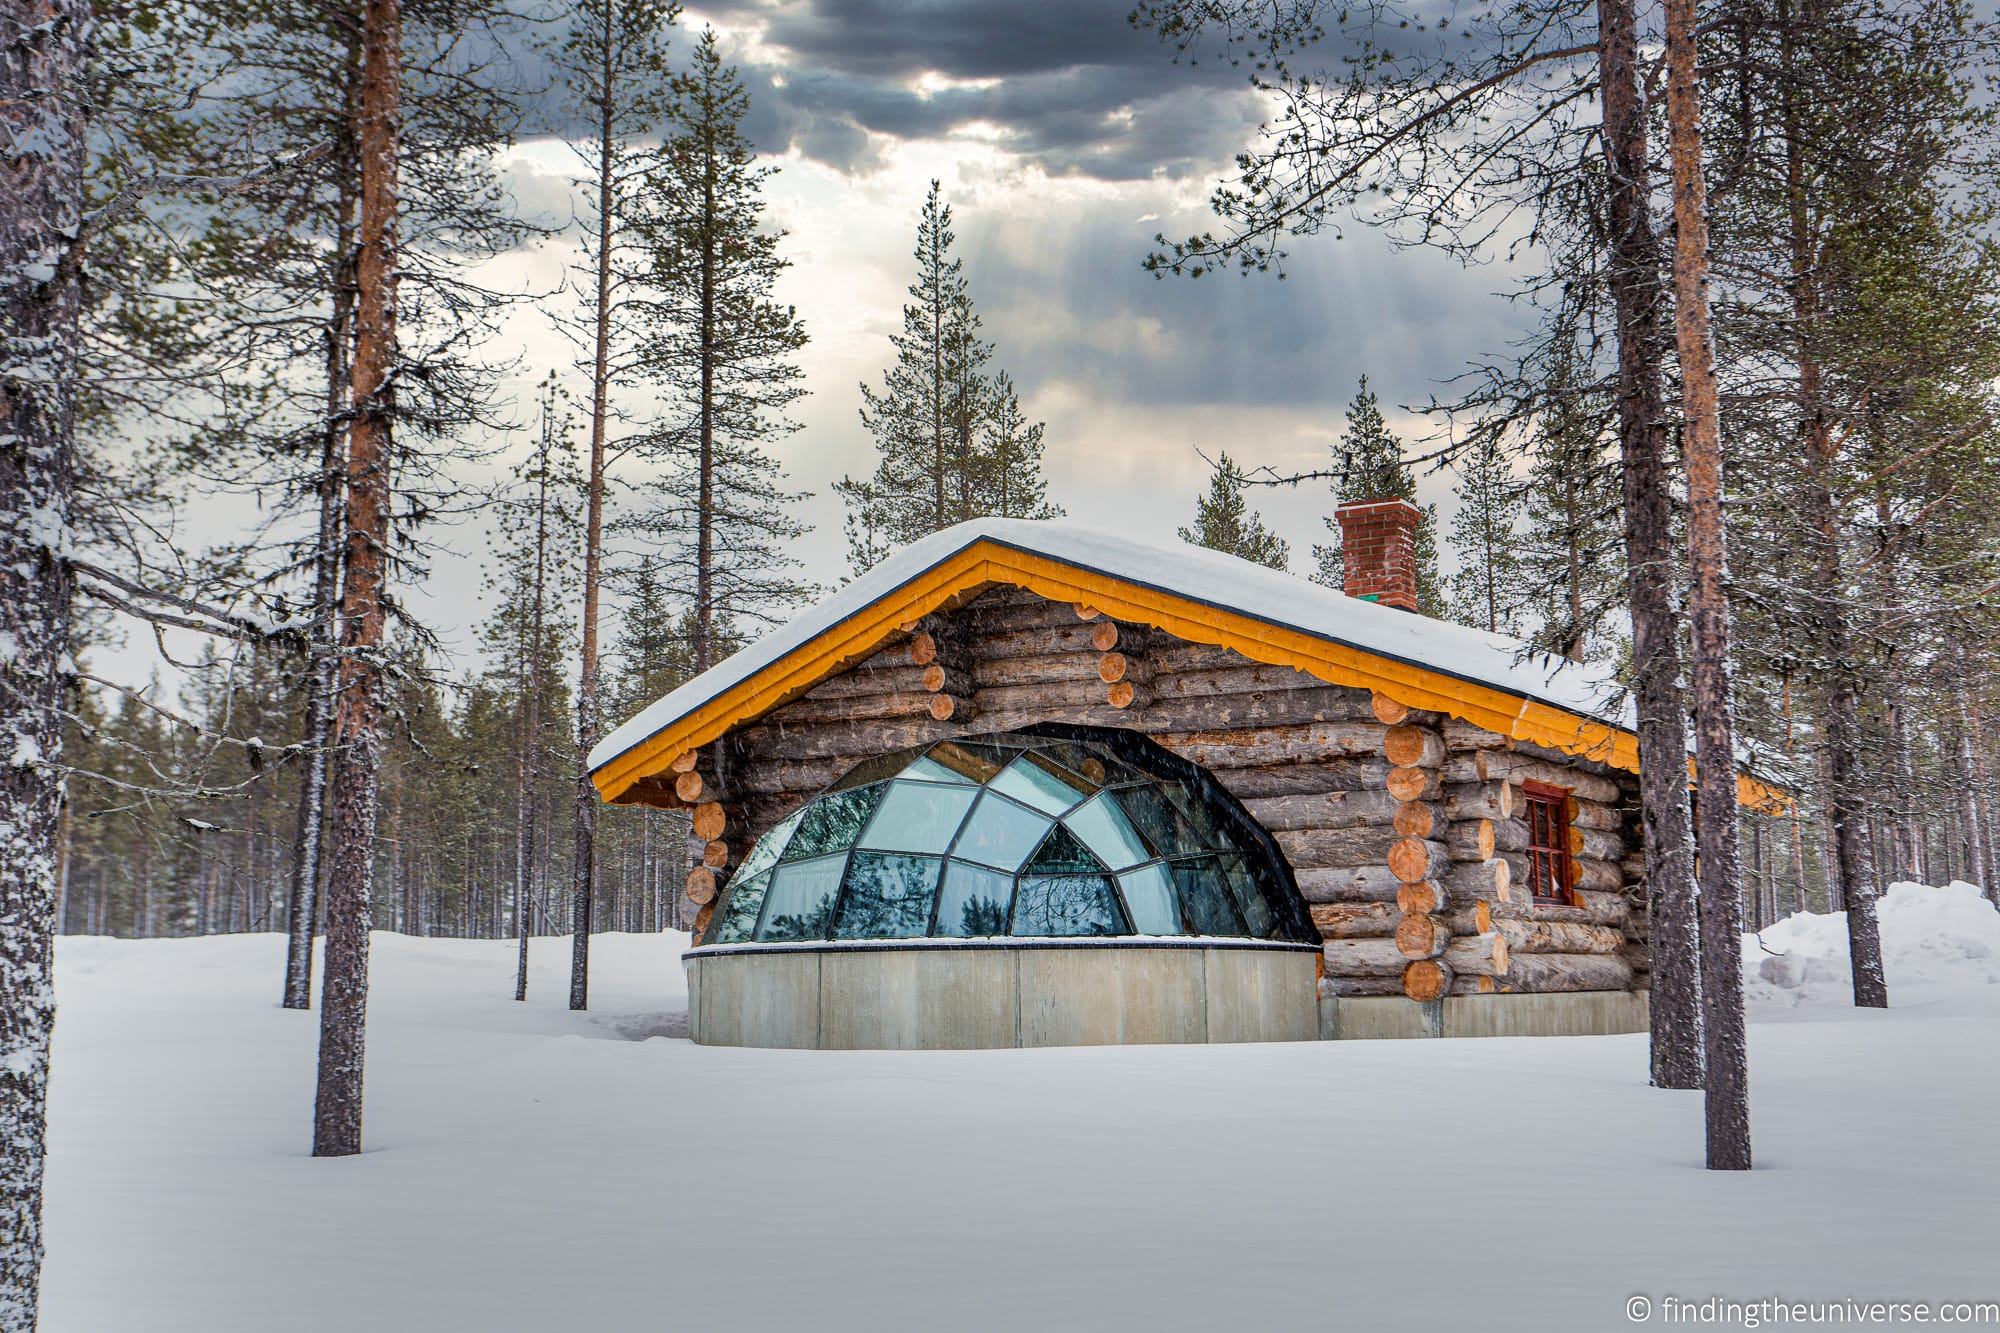 Kakslauttanen Arctic Resort - Kelo Glass igloo cabin